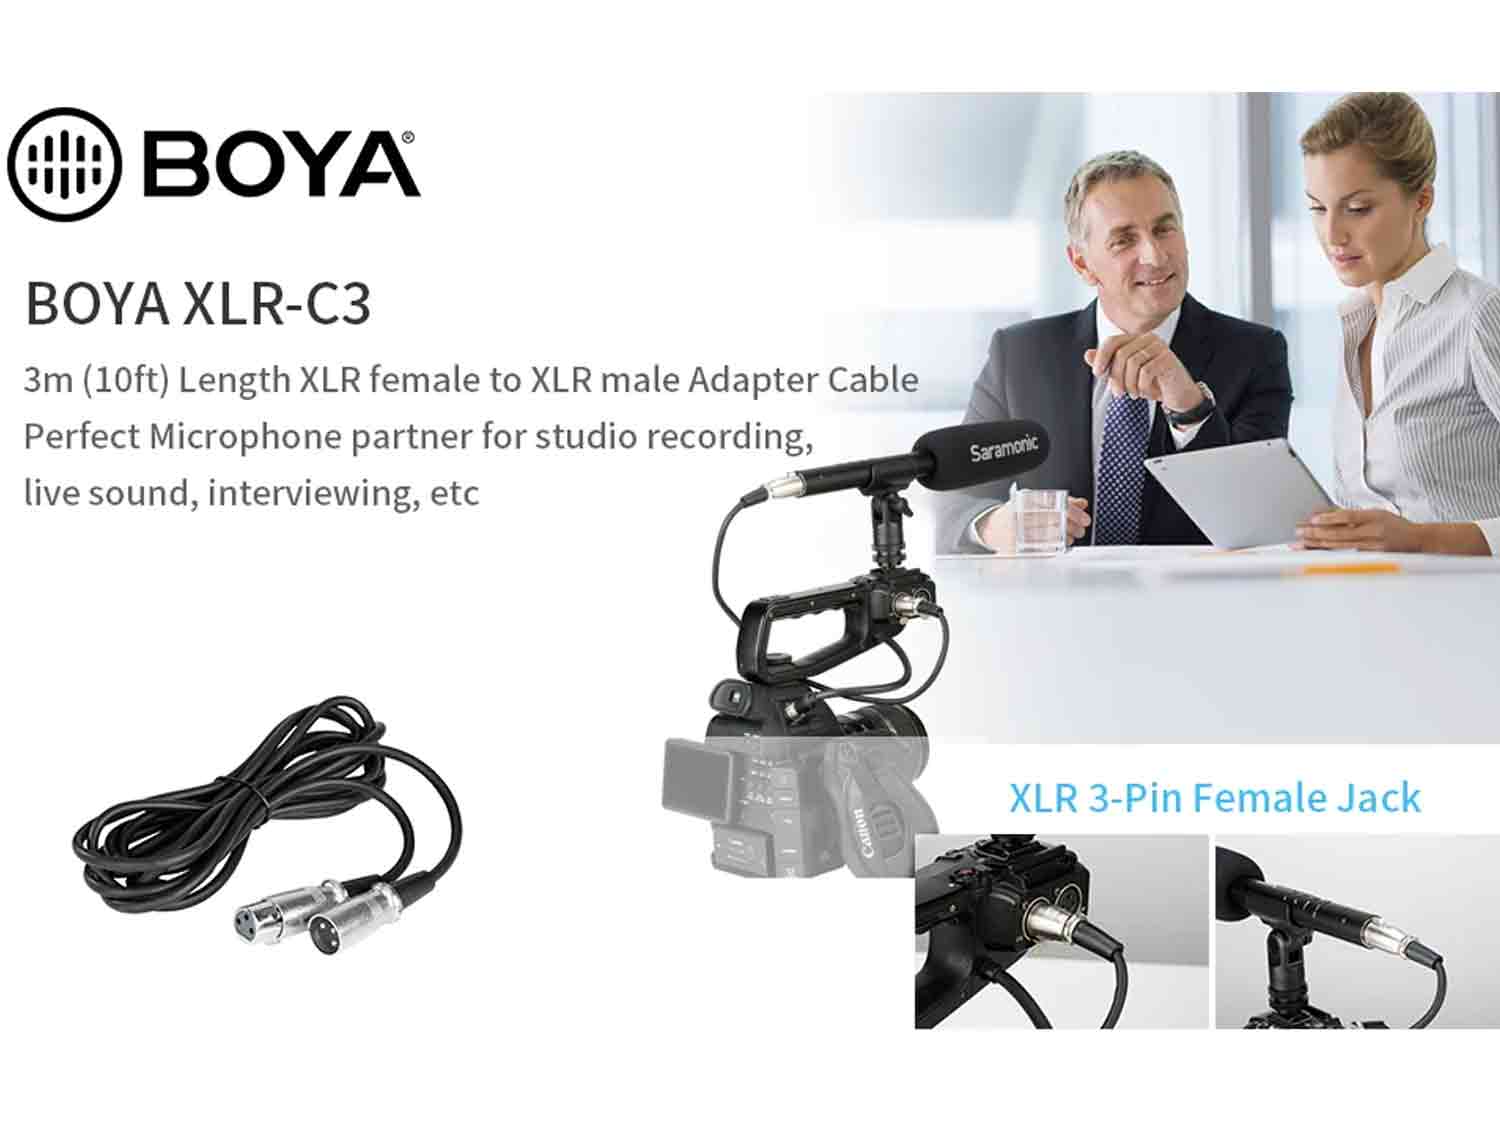 Boya XLR-C3 Audio Adapter Cable